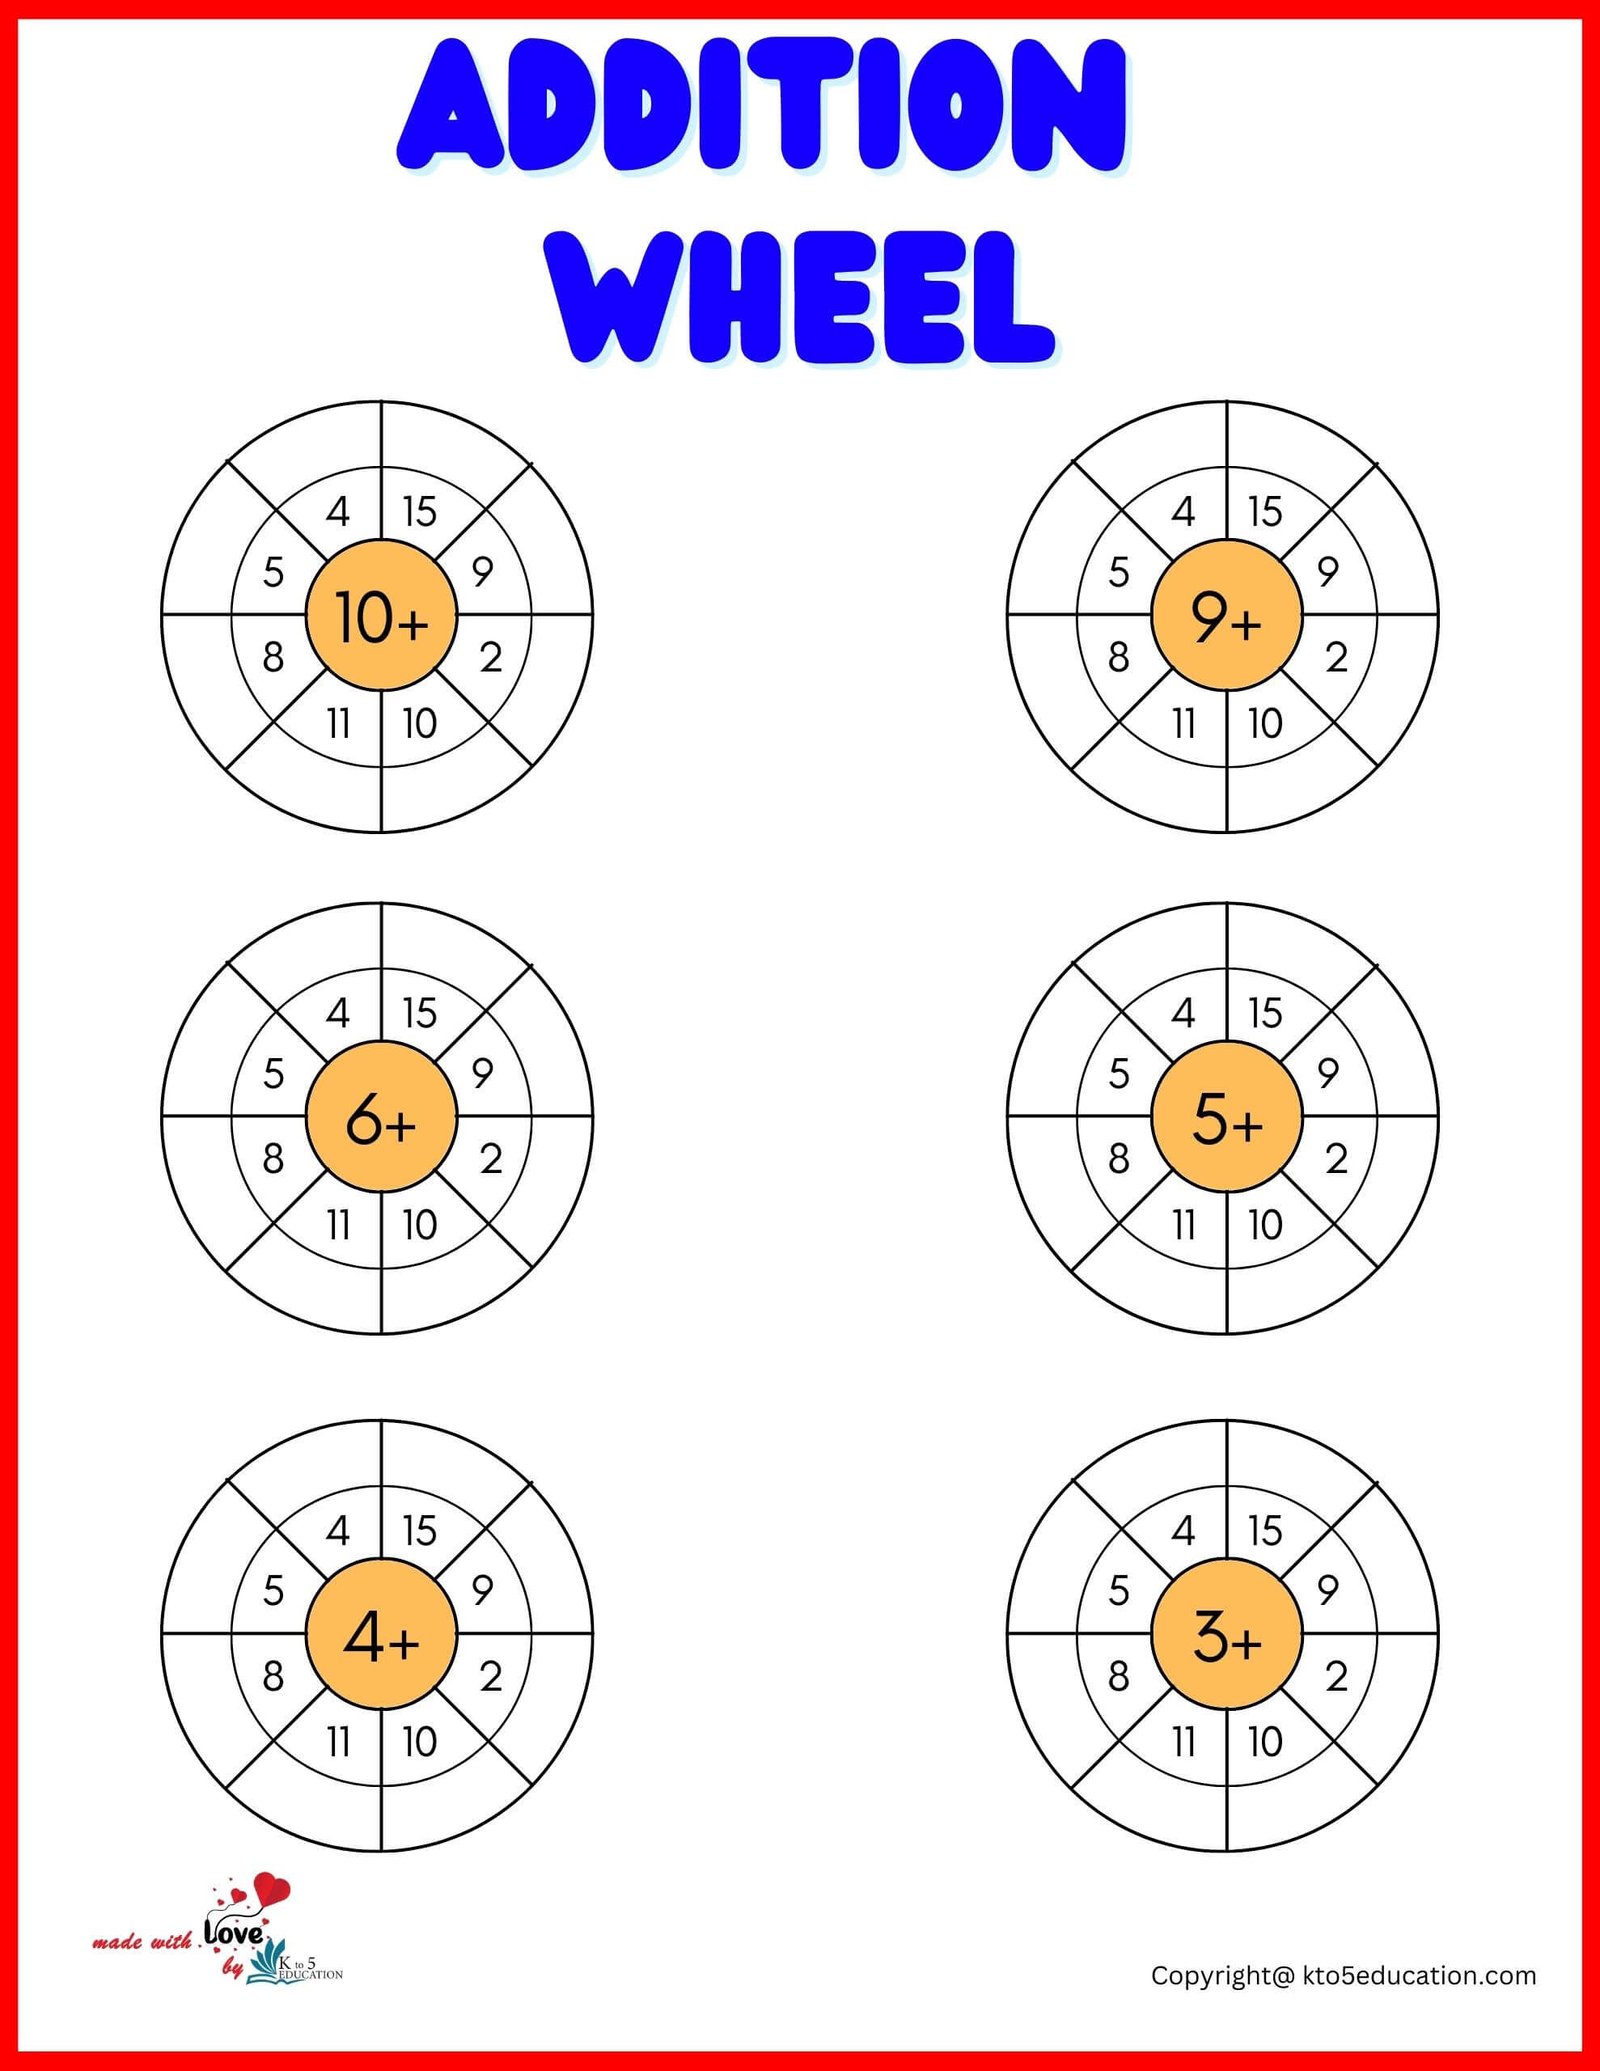 Free Addition Wheel For Online Practice Worksheet